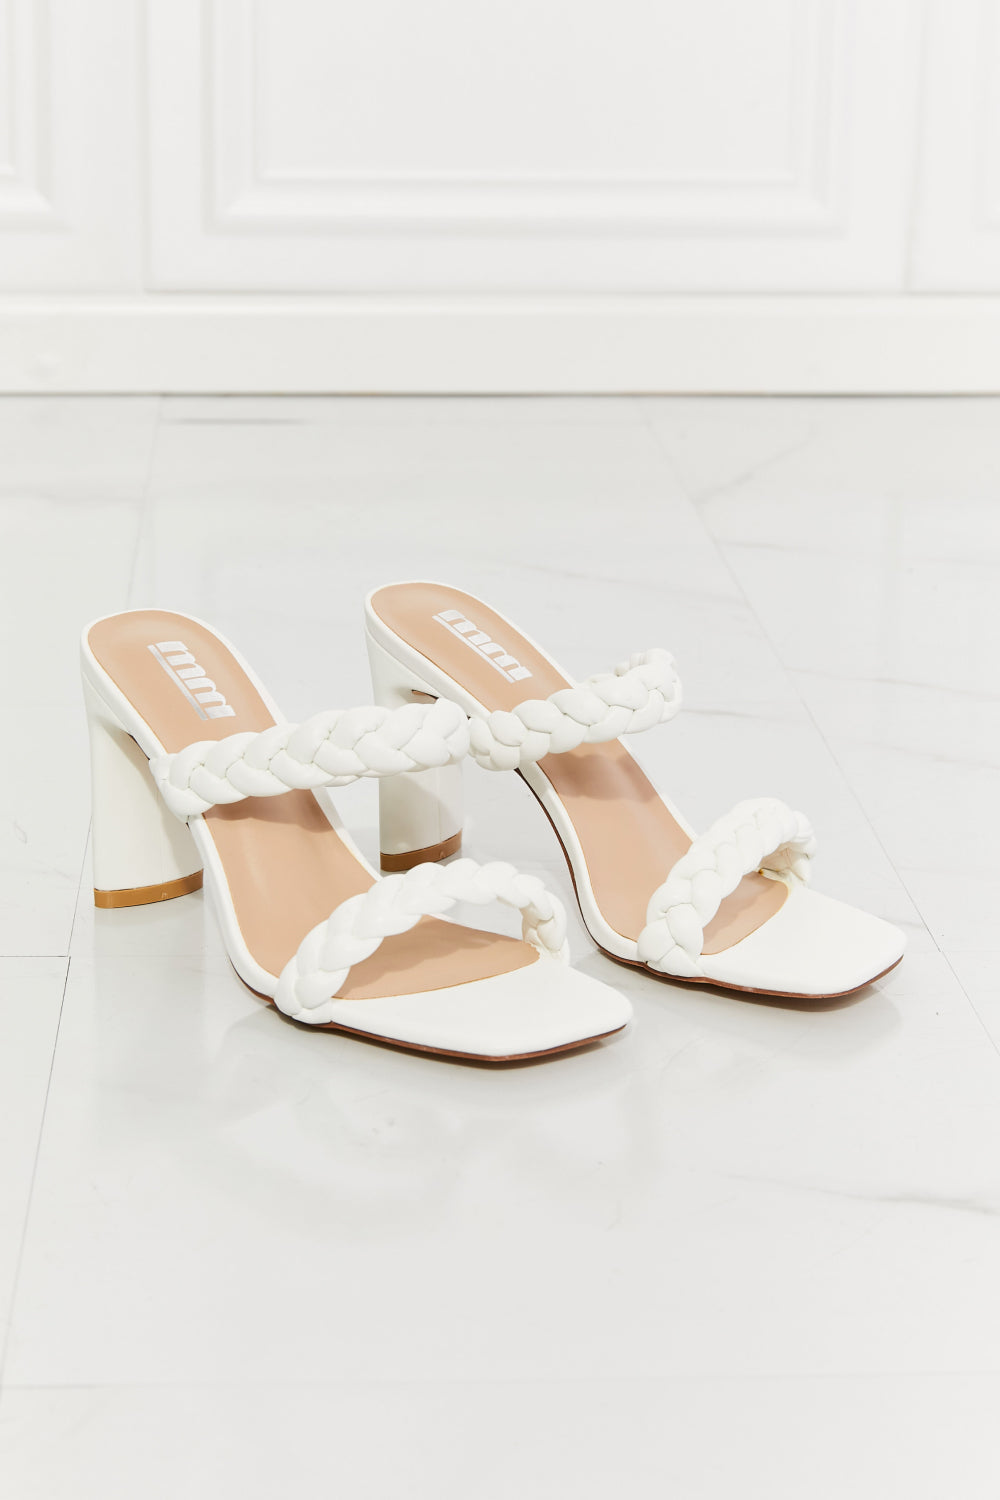 MMShoes In Love Double Braided Block Heel Sandal in White Trendsi